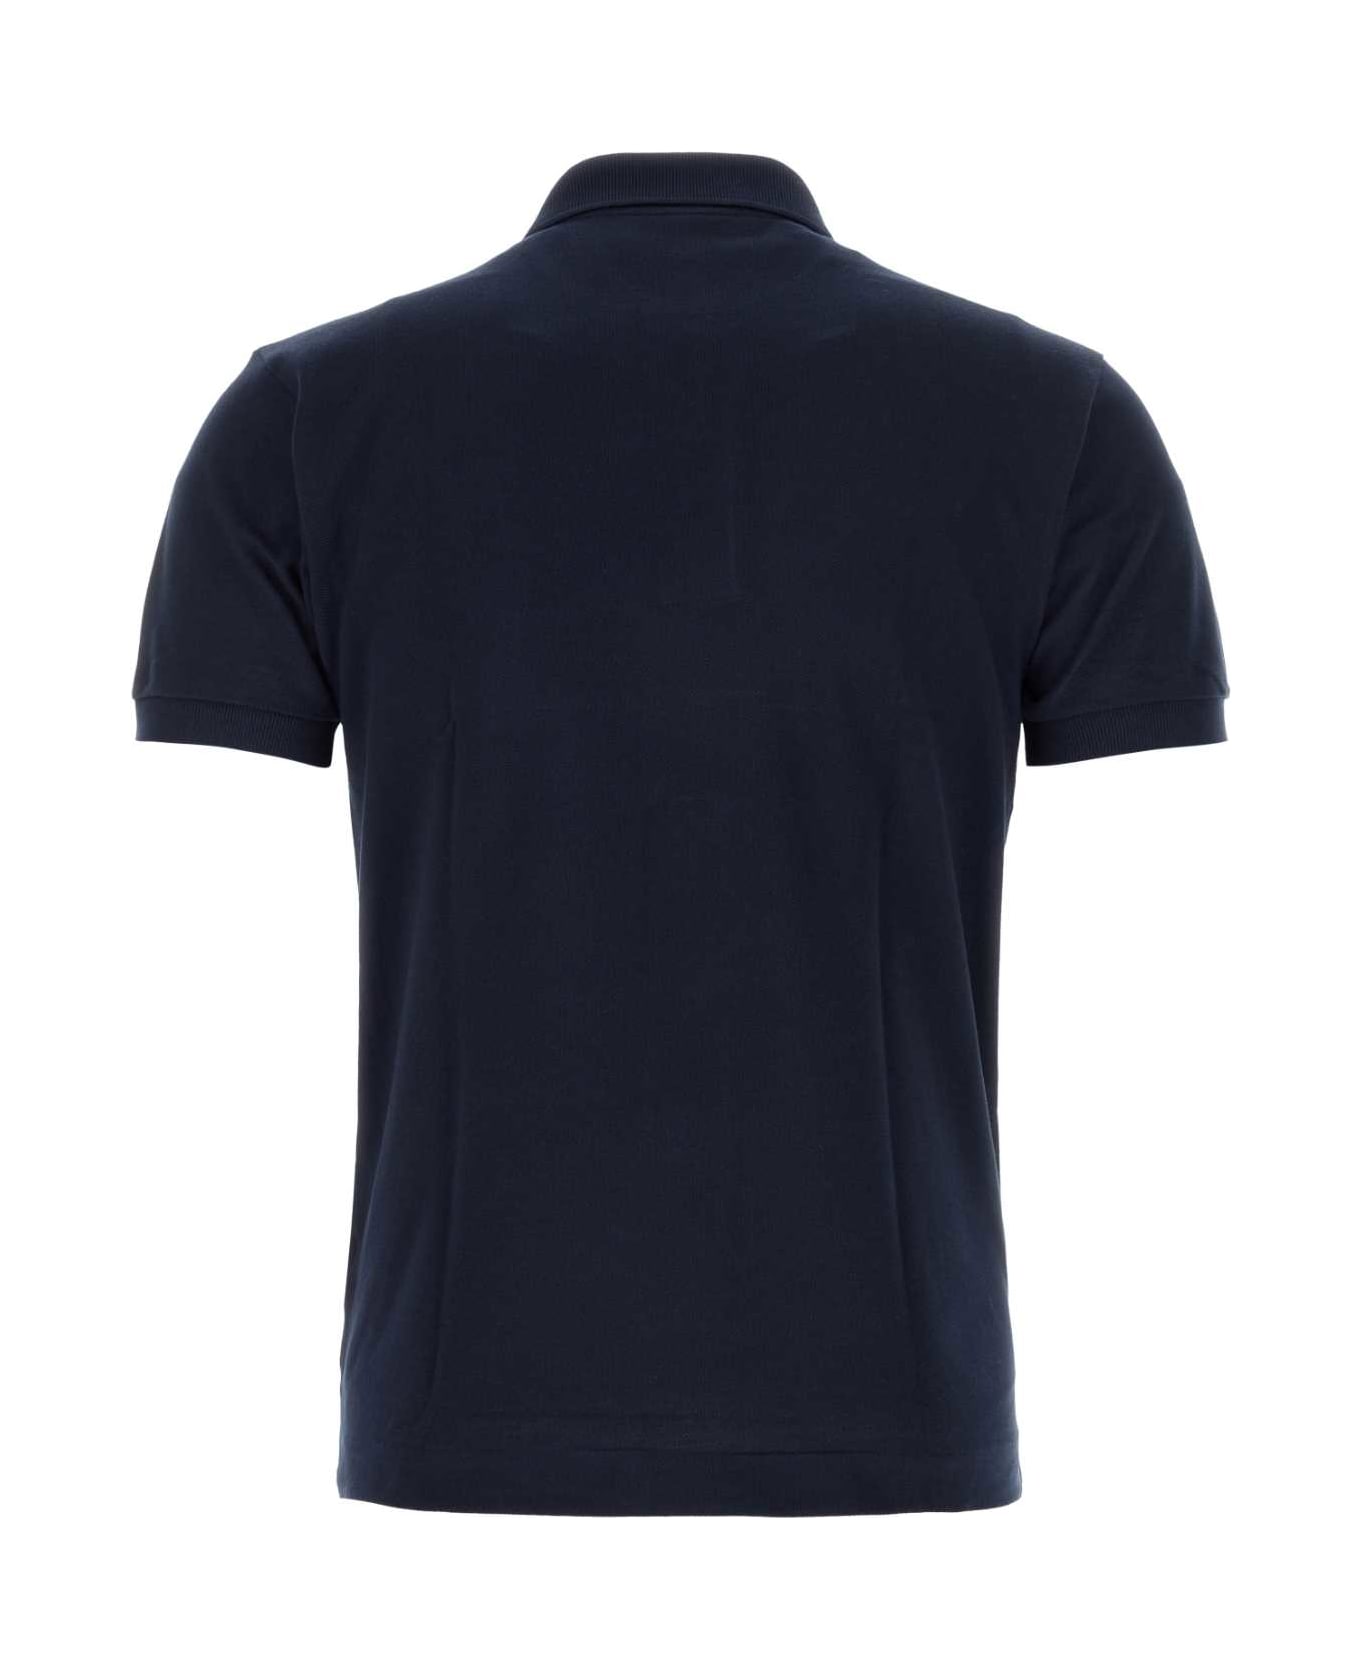 Lacoste Navy Blue Piquet Polo Shirt - 166 ポロシャツ